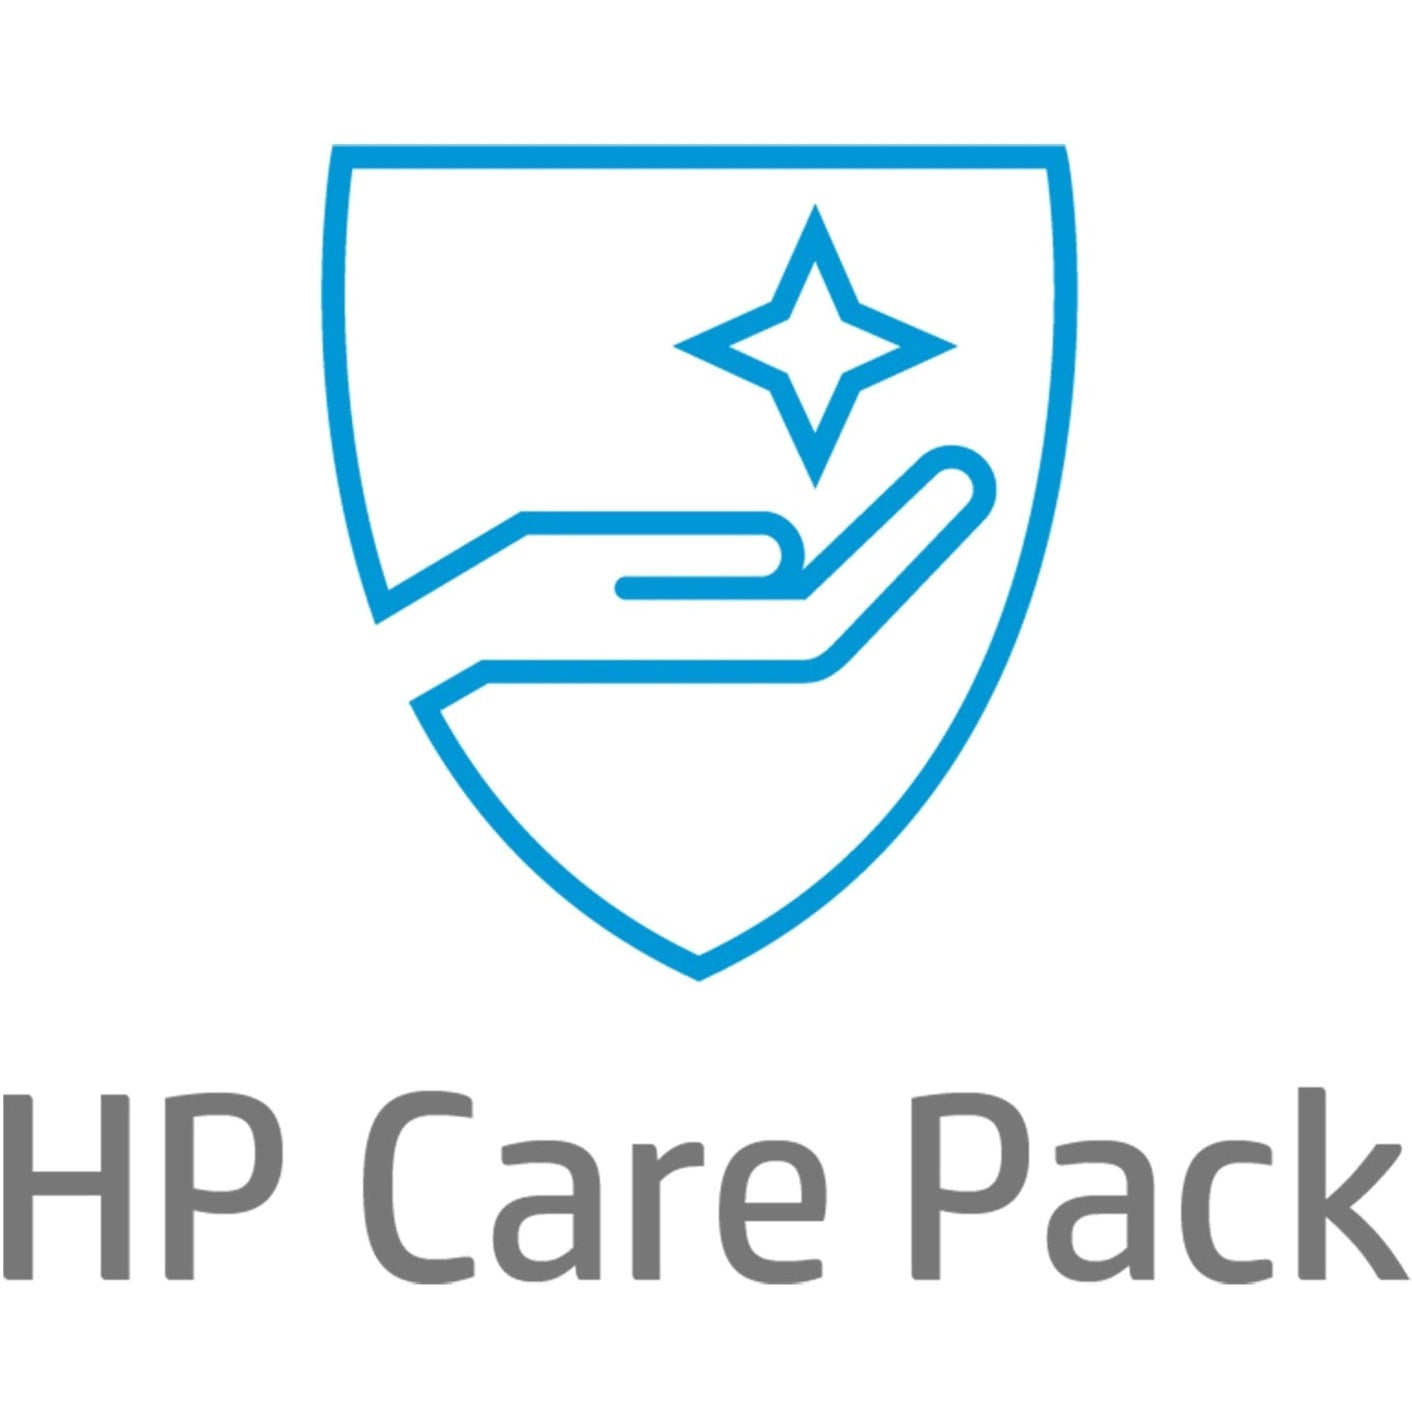 HP Care Pack - 3 Year - Service (UK712E)